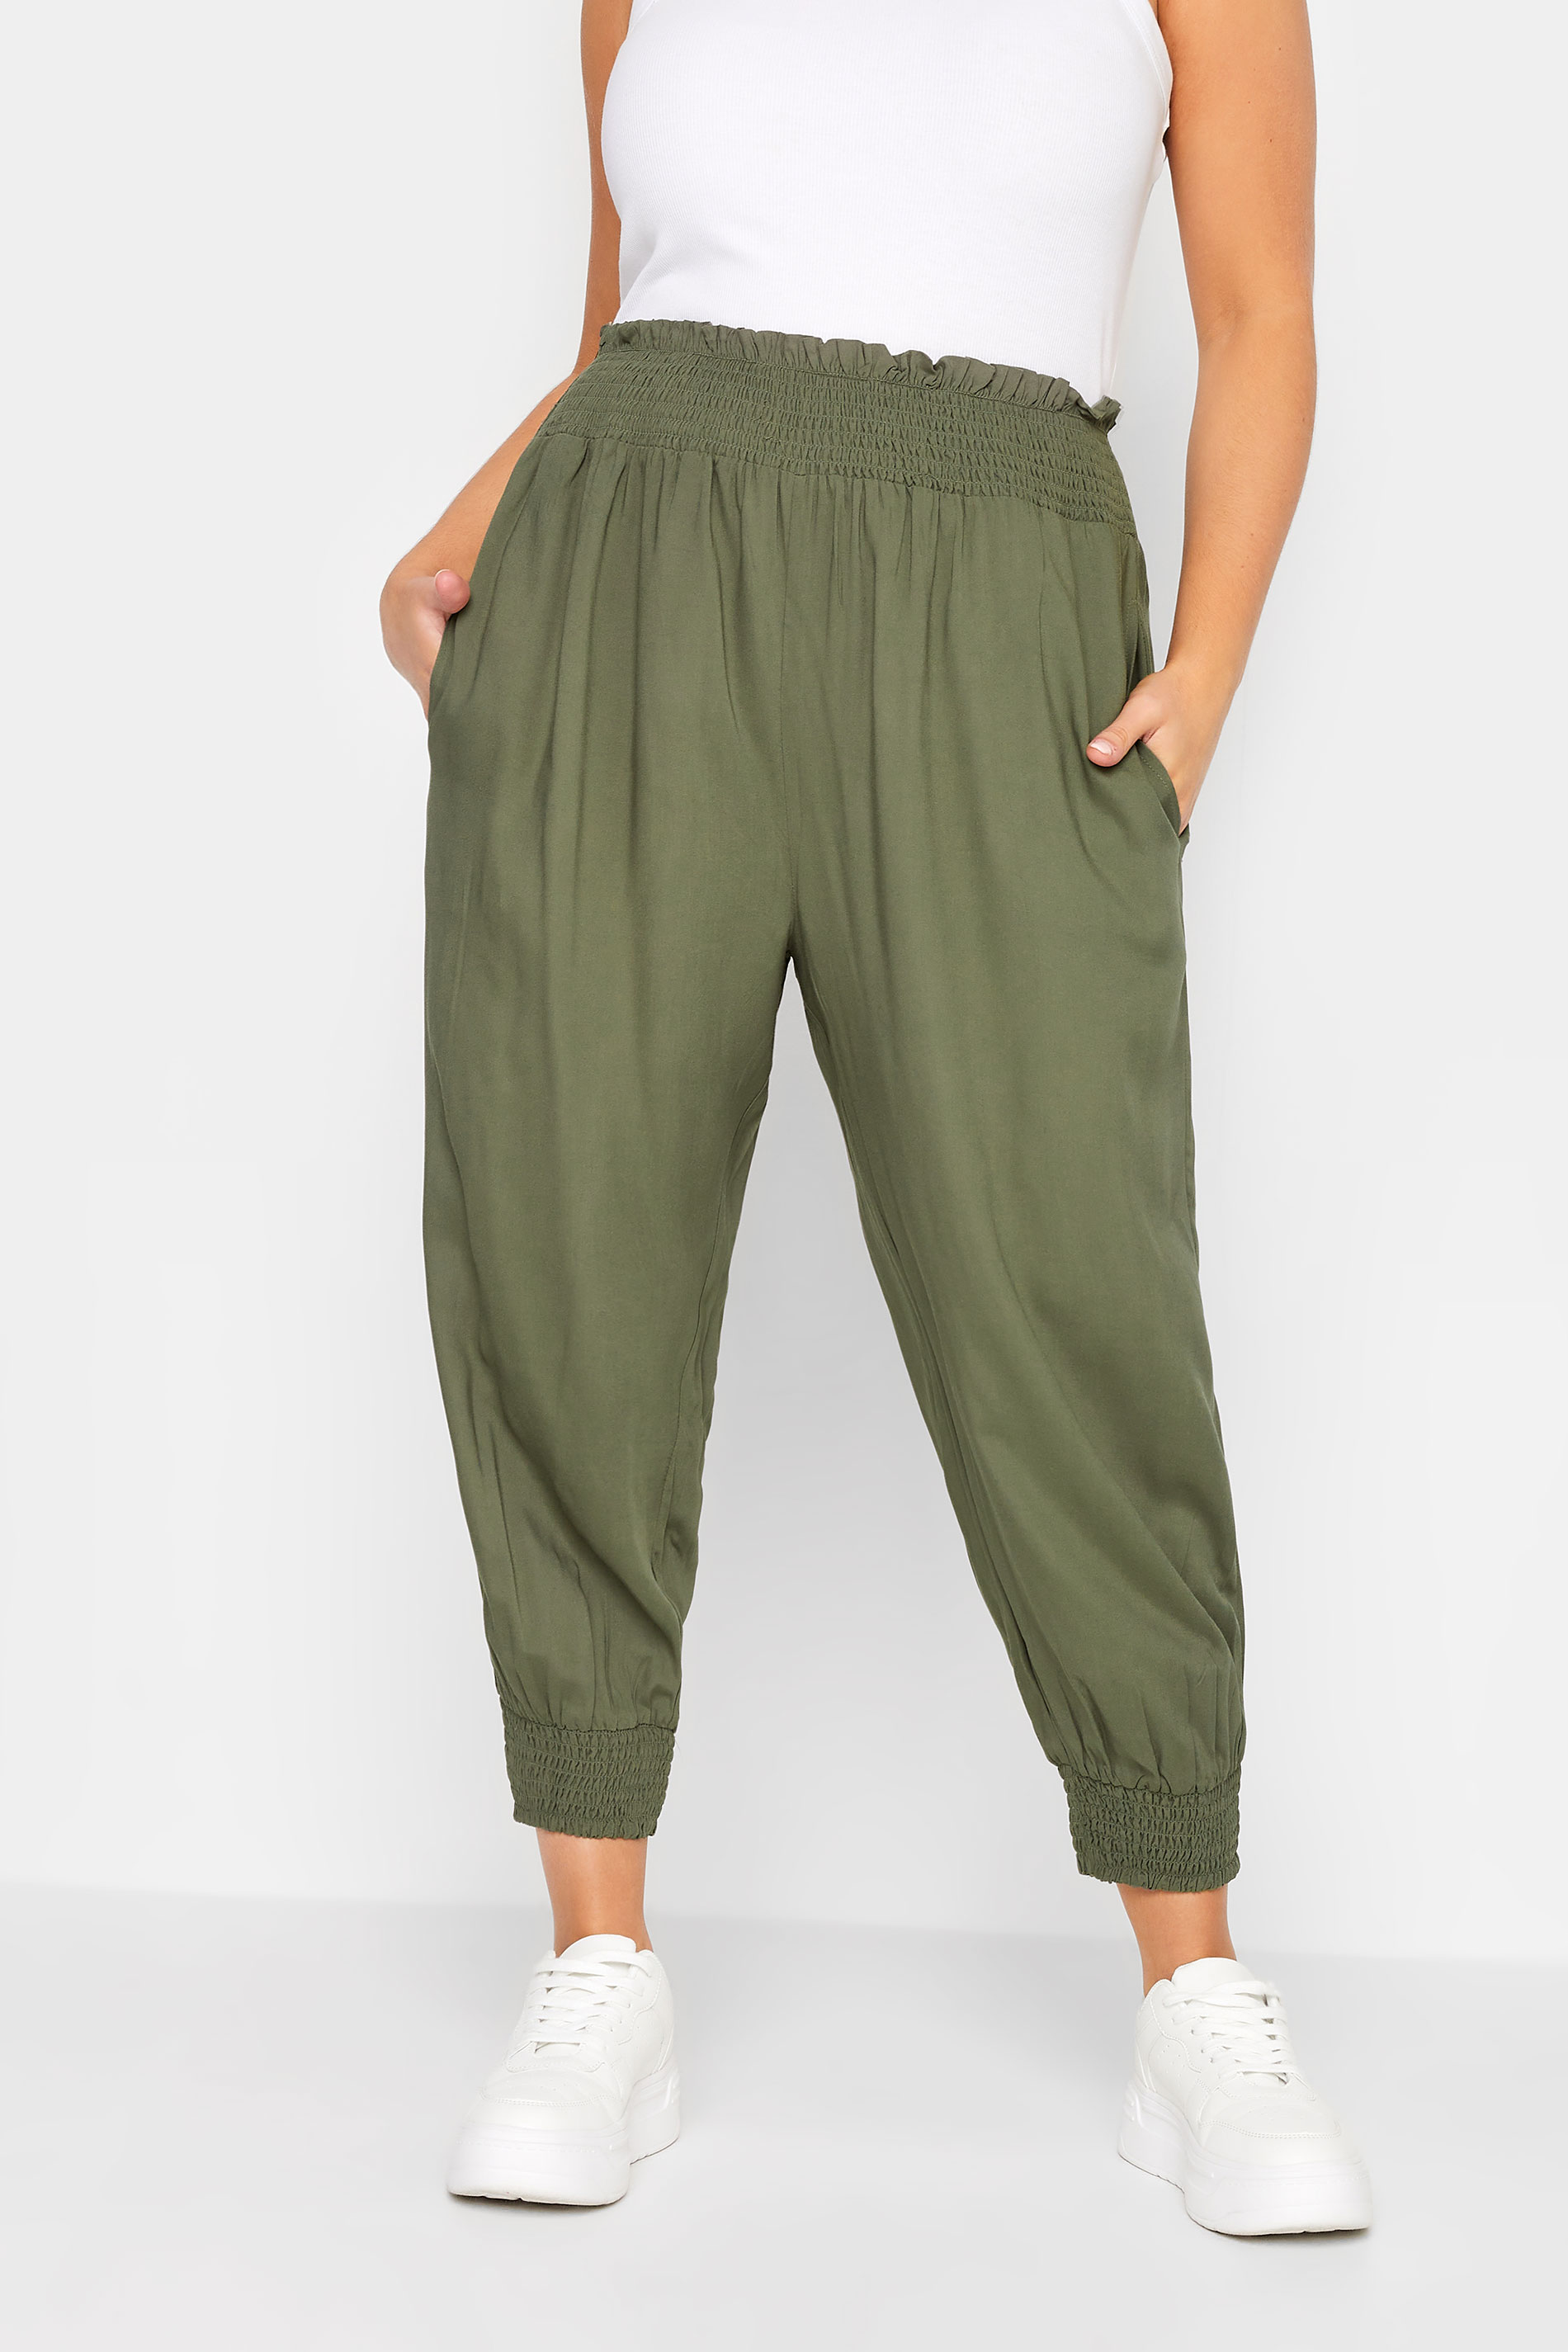 Unisex Linen Drop Crotch Harem Pants - Loose, Baggy & Organic Clothing -  ALLSEAMS